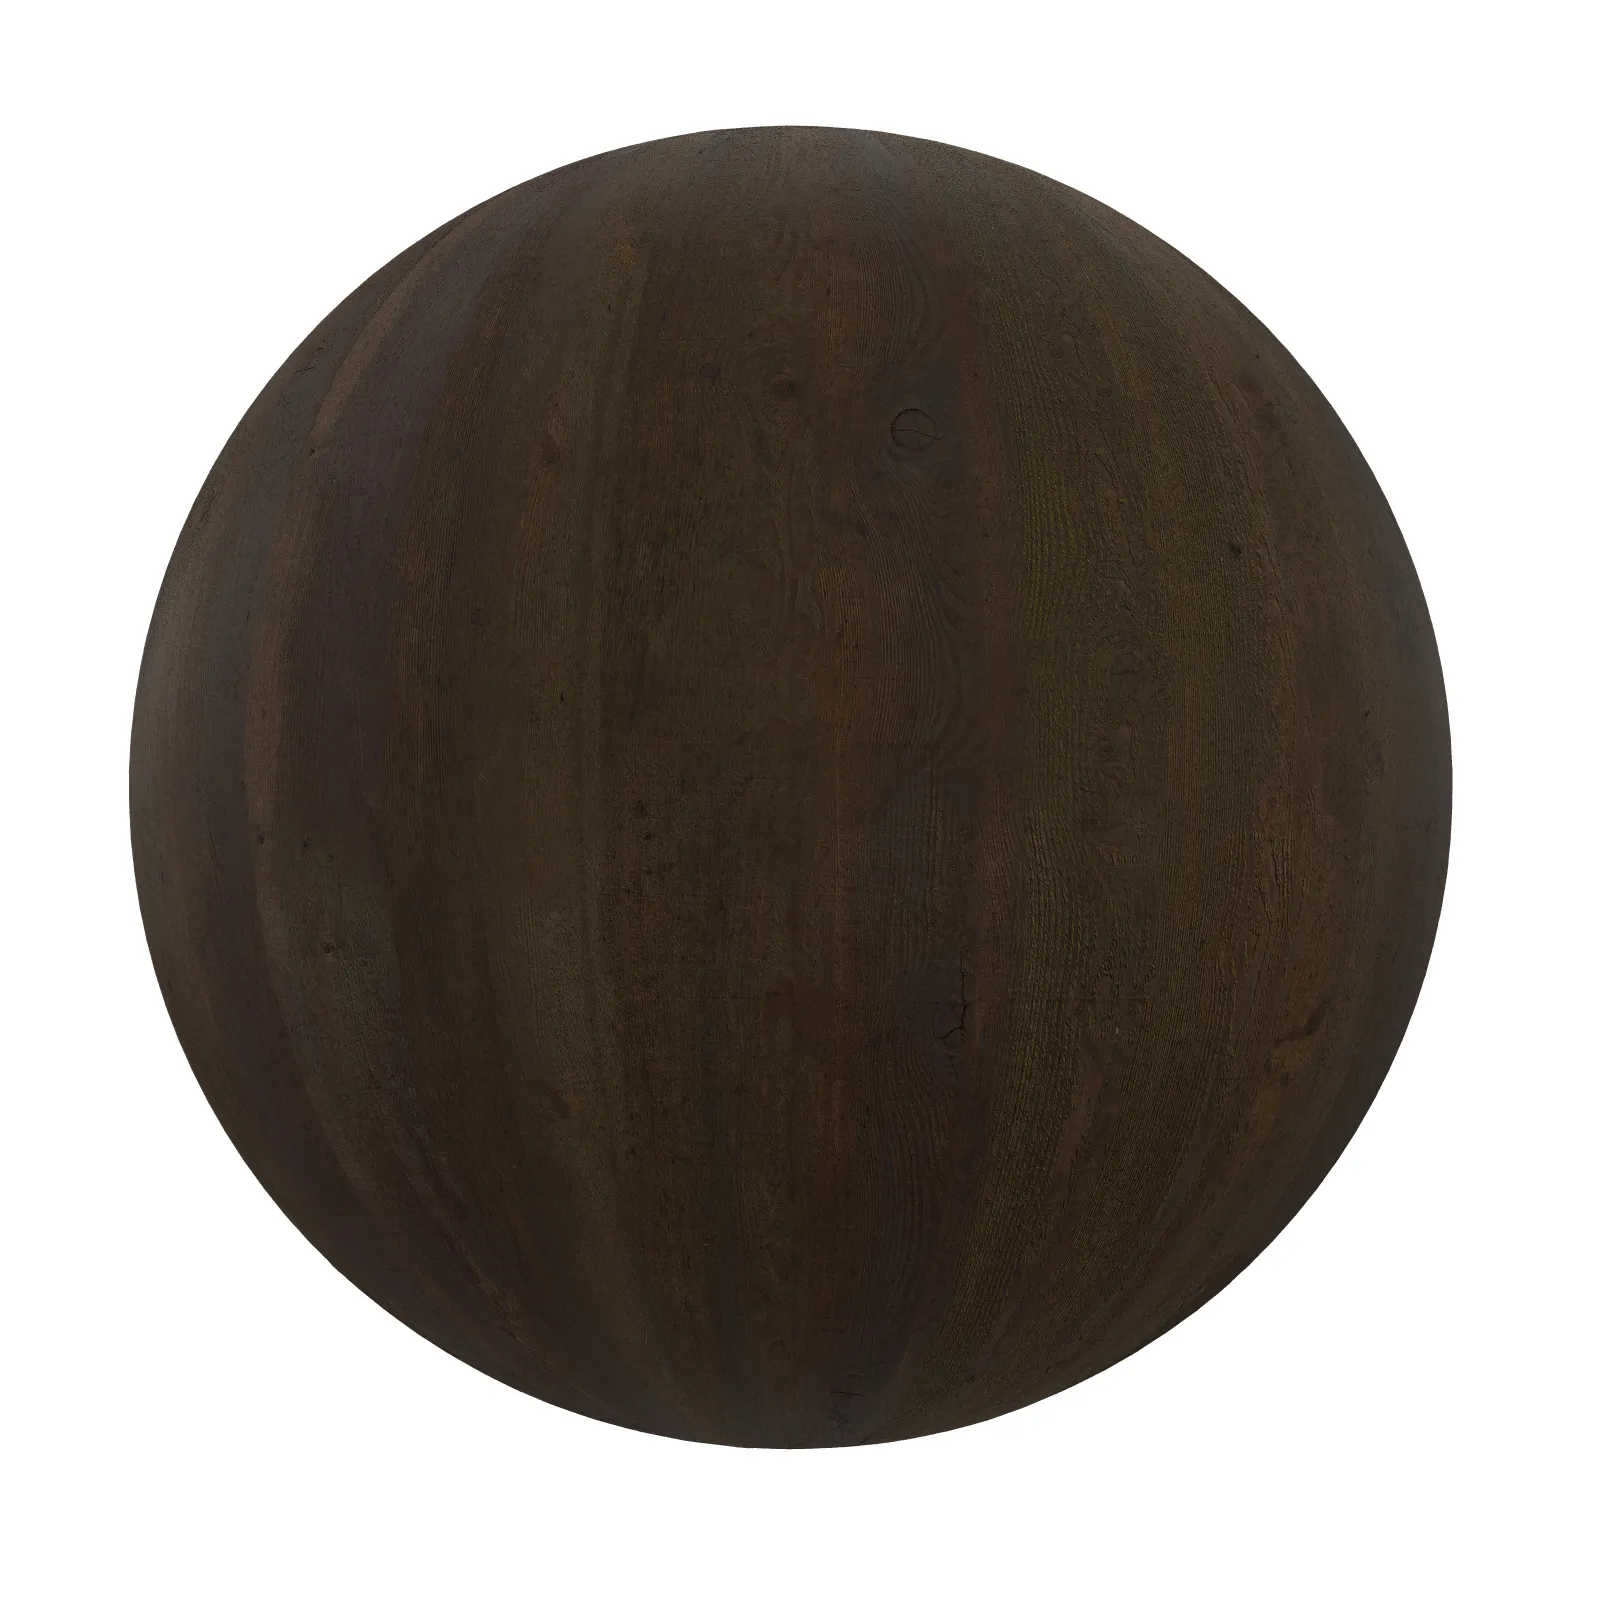 3ds Max Files – Texture – 8 – Wood Texture – 83 – Wood Texture by Minh Nguyen